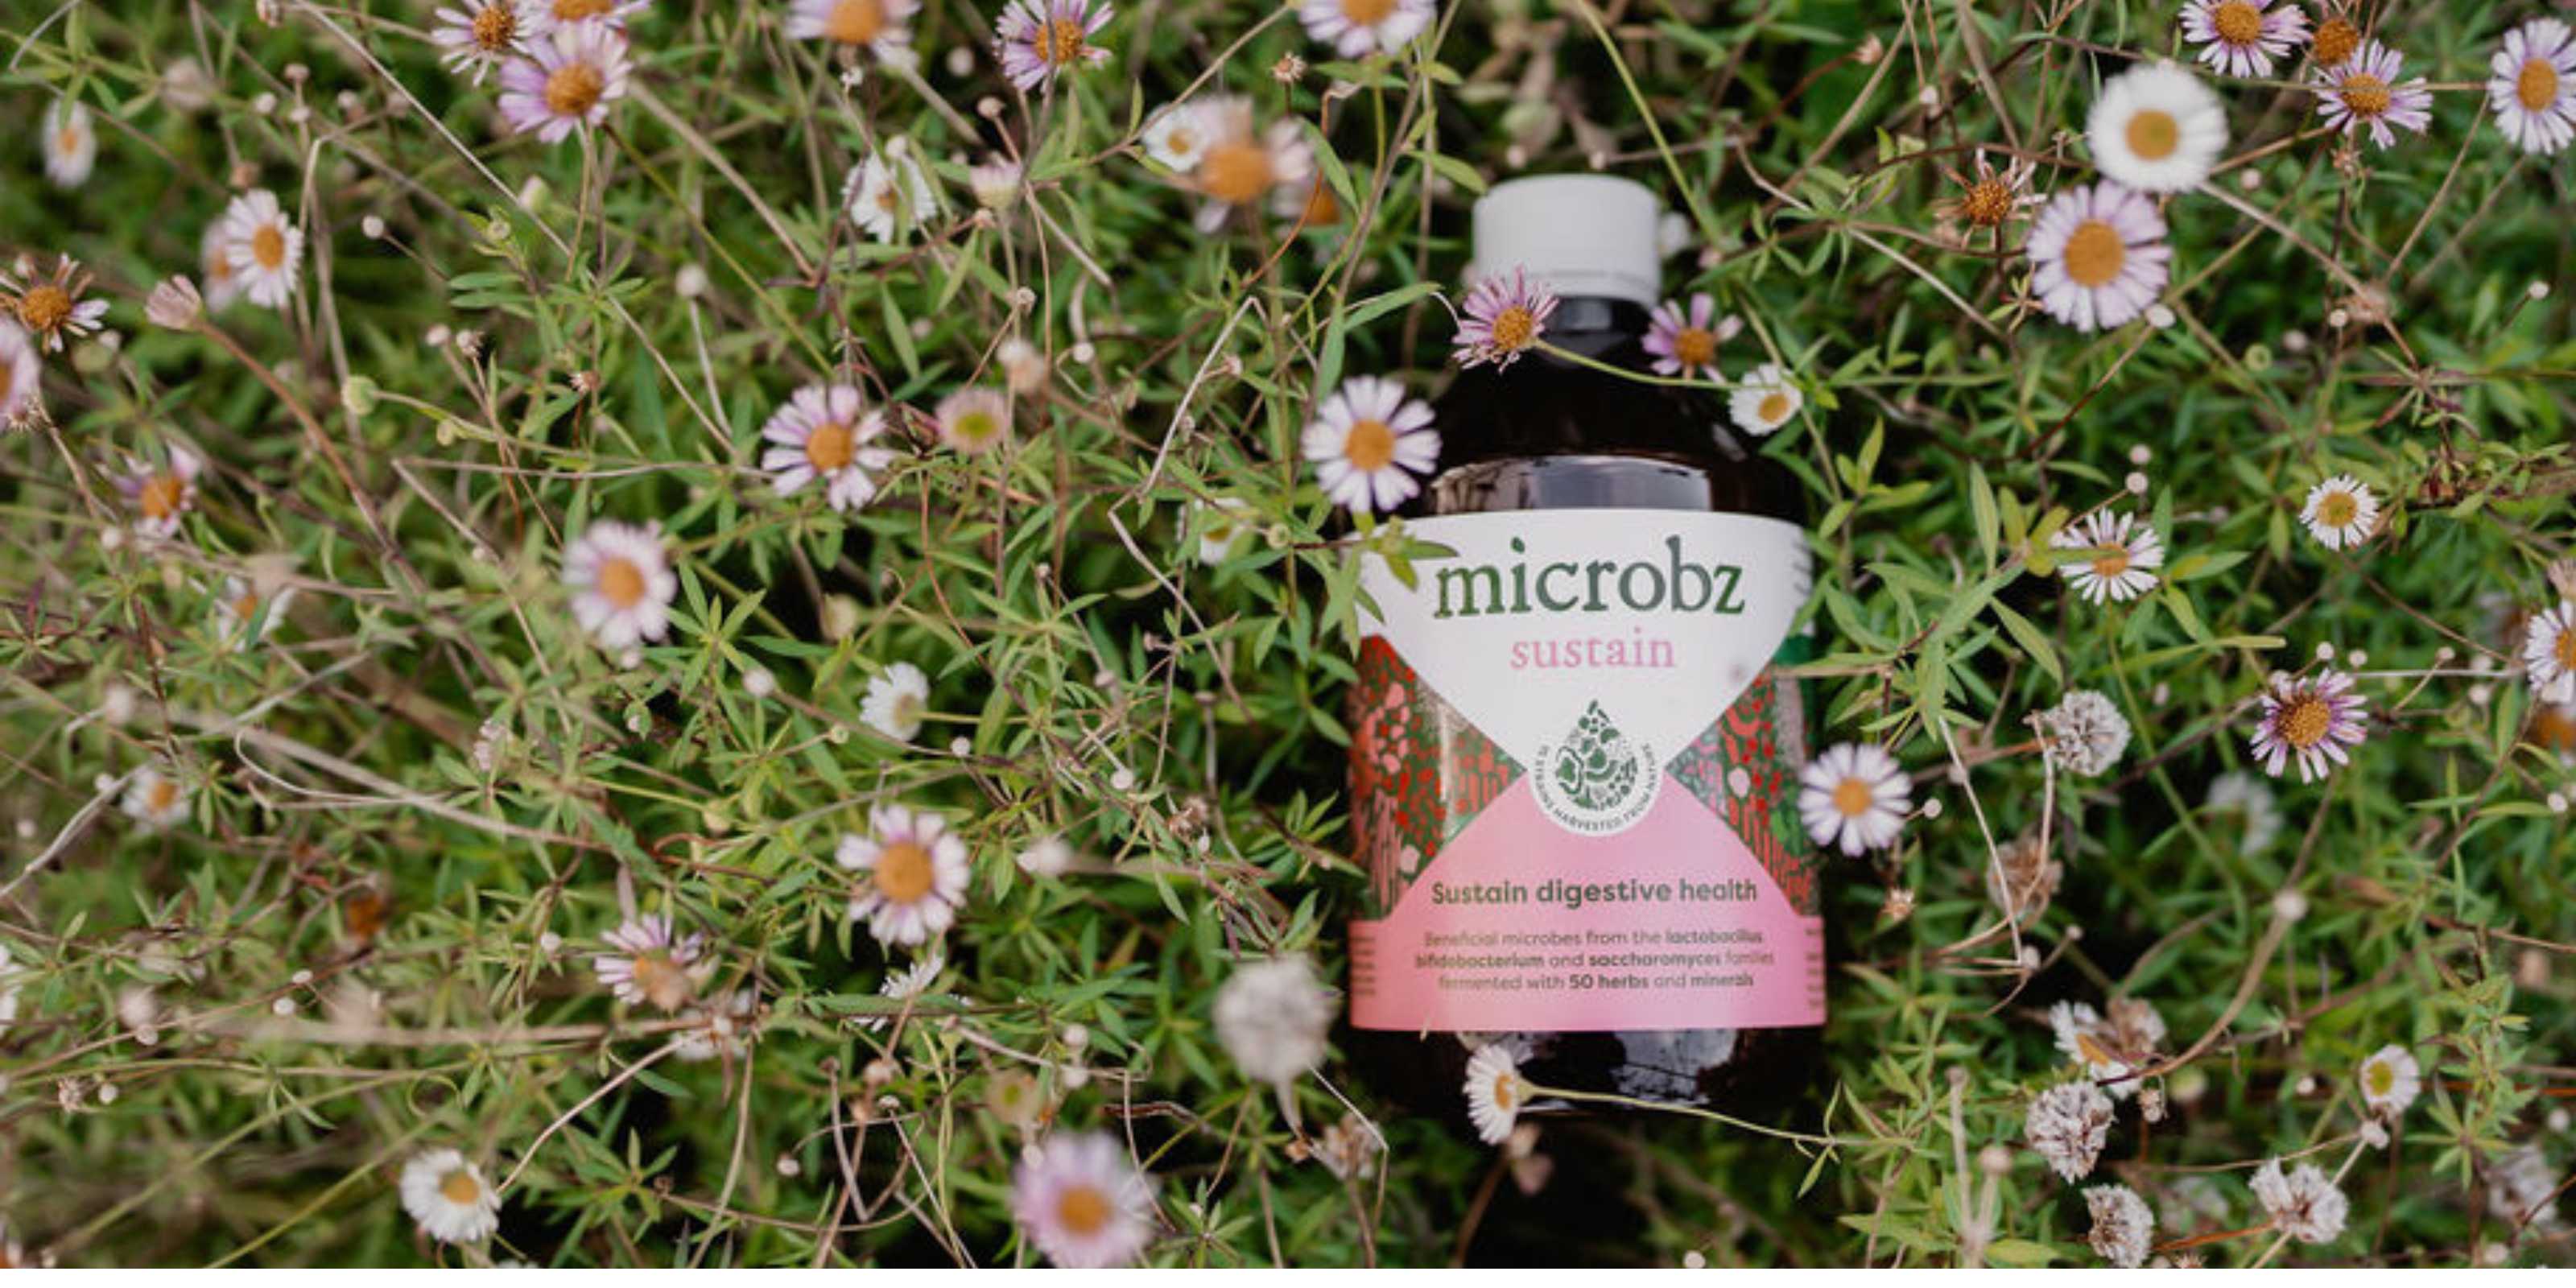 bottle of microbz sustain in flowers